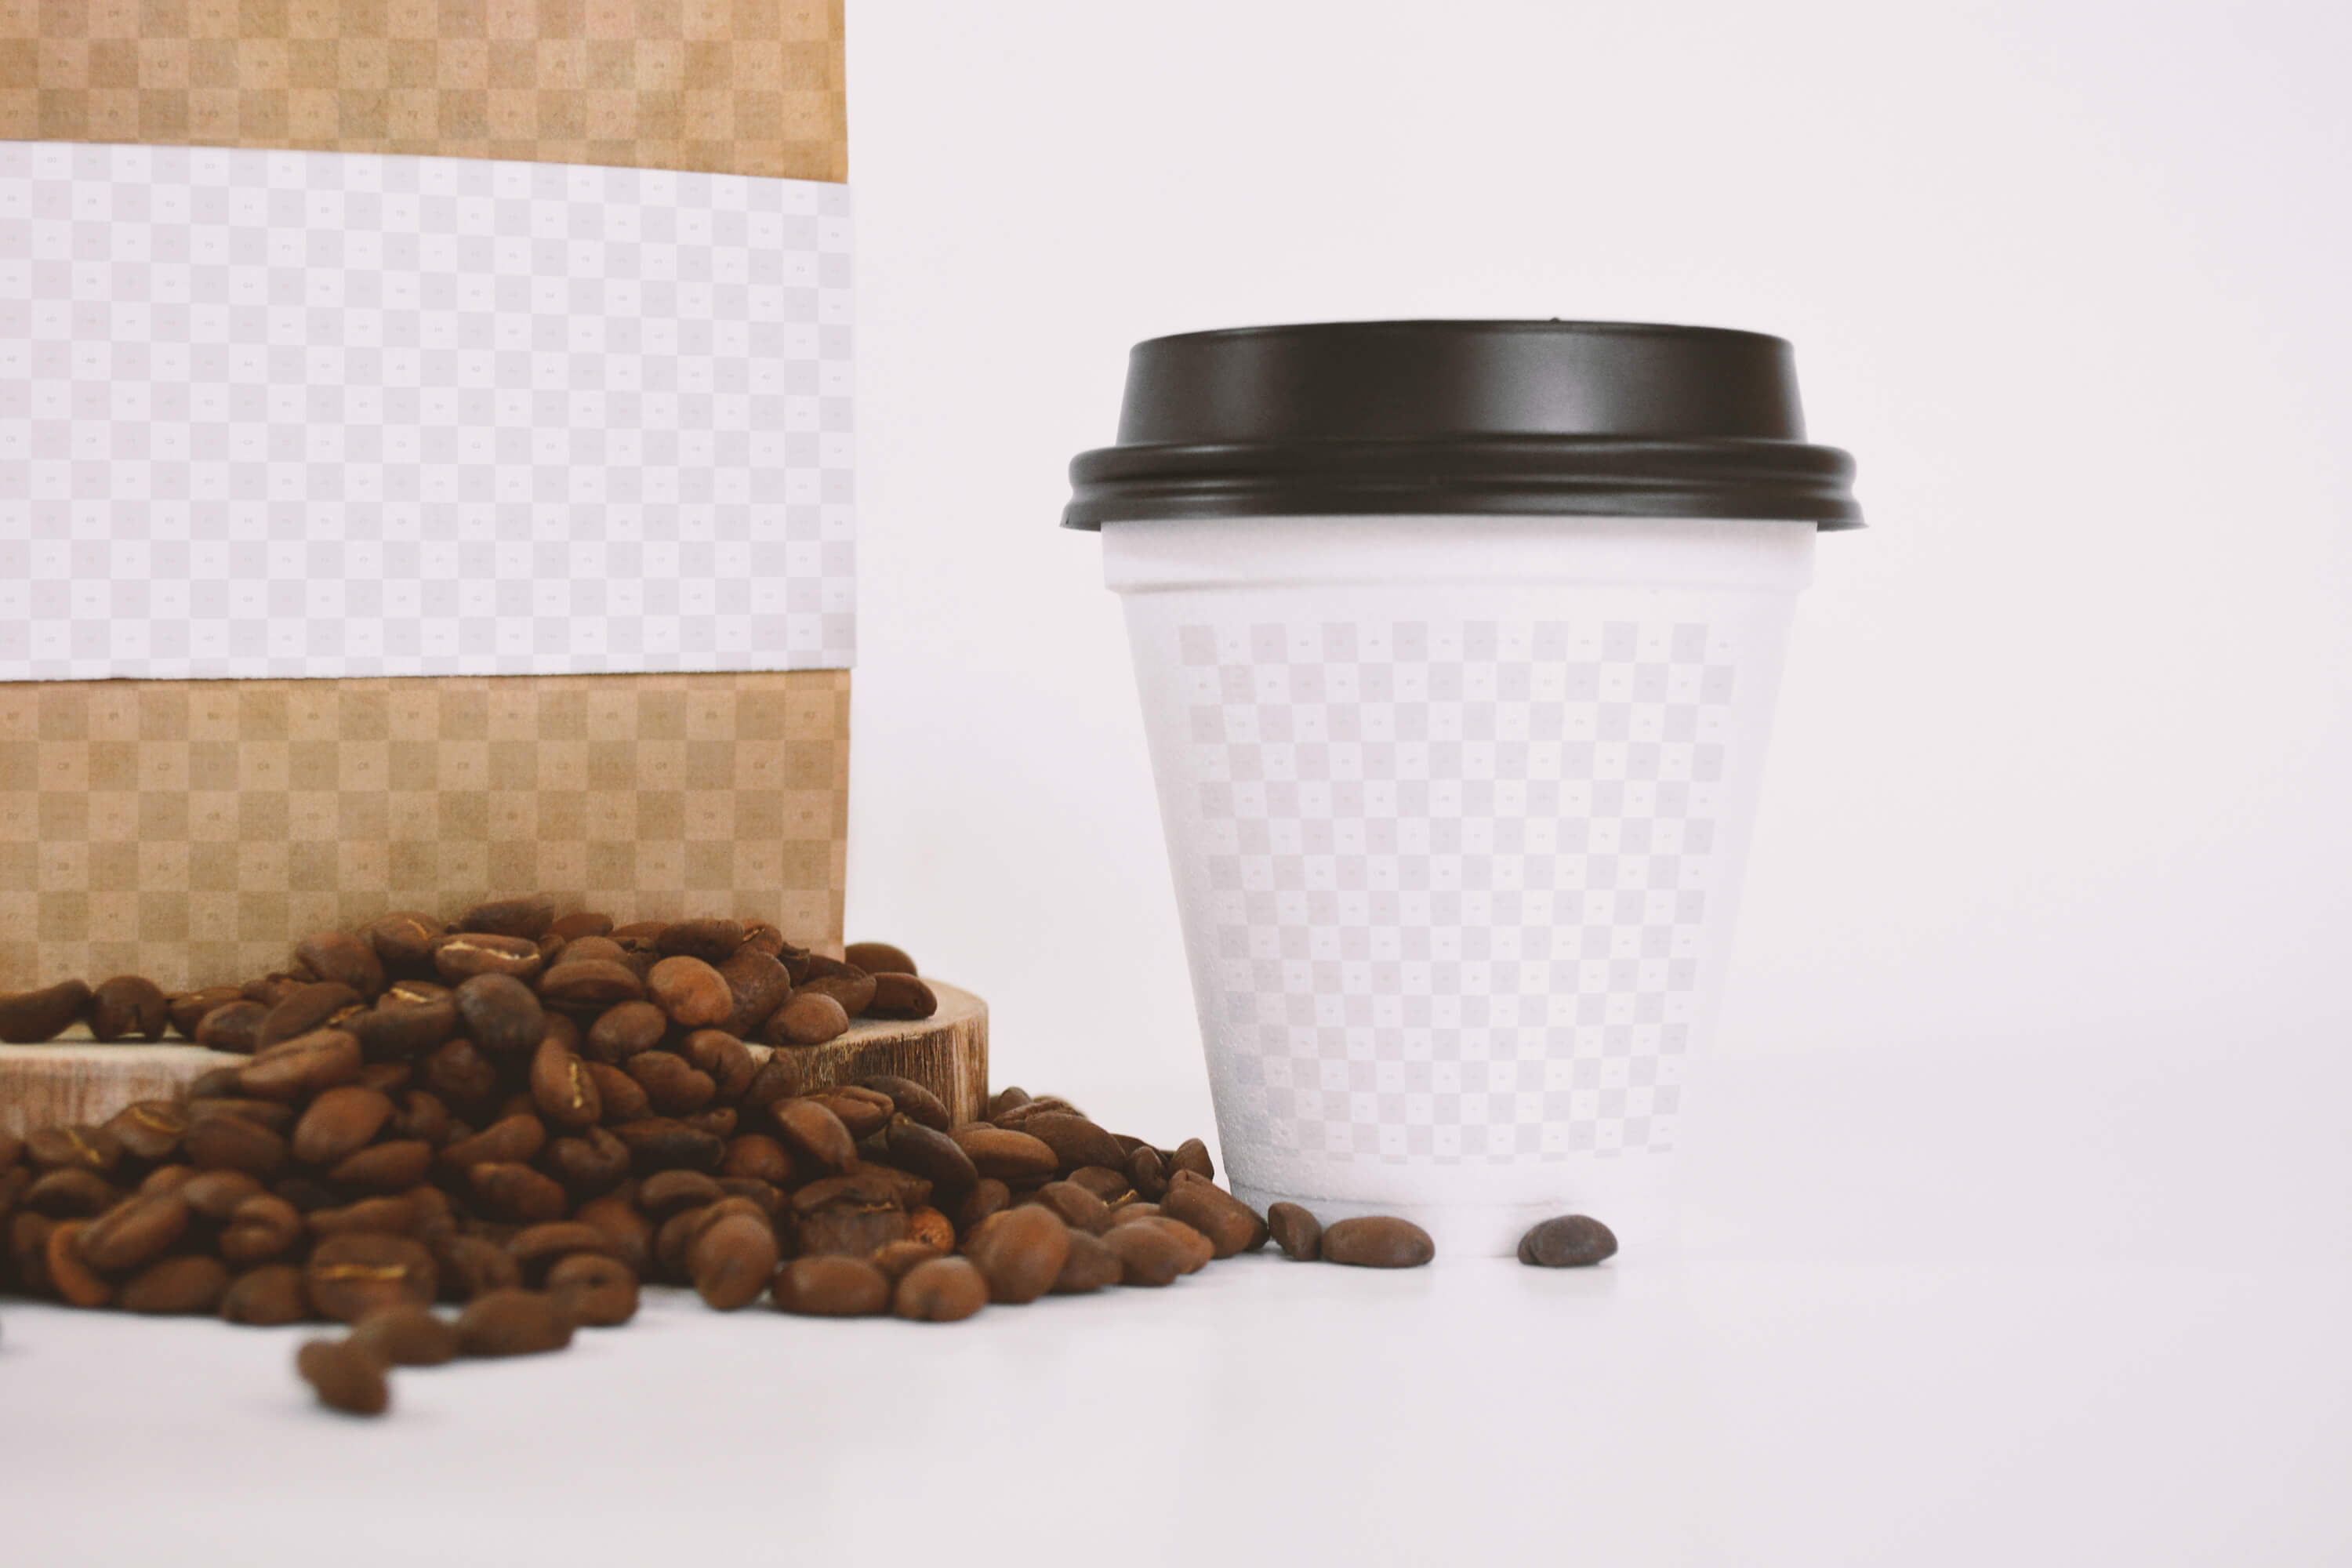 咖啡豆包装袋和咖啡纸杯设计效果图近景样机 Coffee Bag and Sealed Cup Mockup Close up View插图(1)